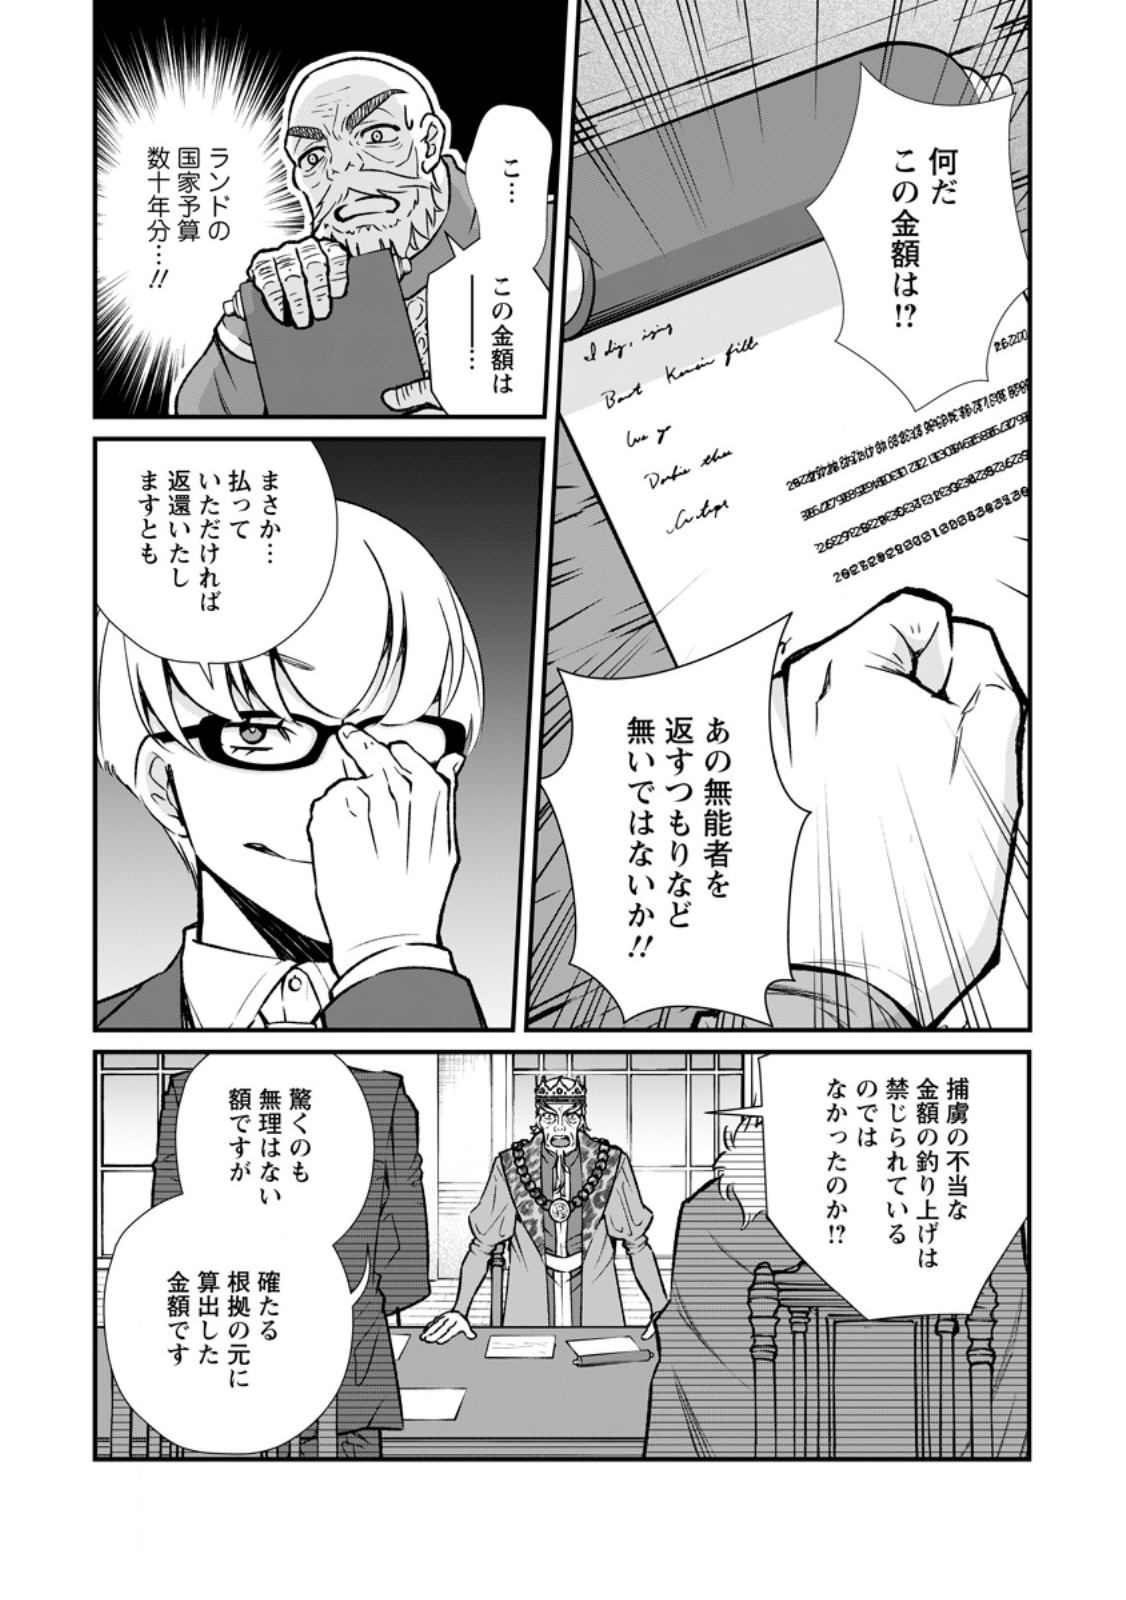 Taida no Ouji wa Sokoku wo Suteru - Chapter 11.2 - Page 5